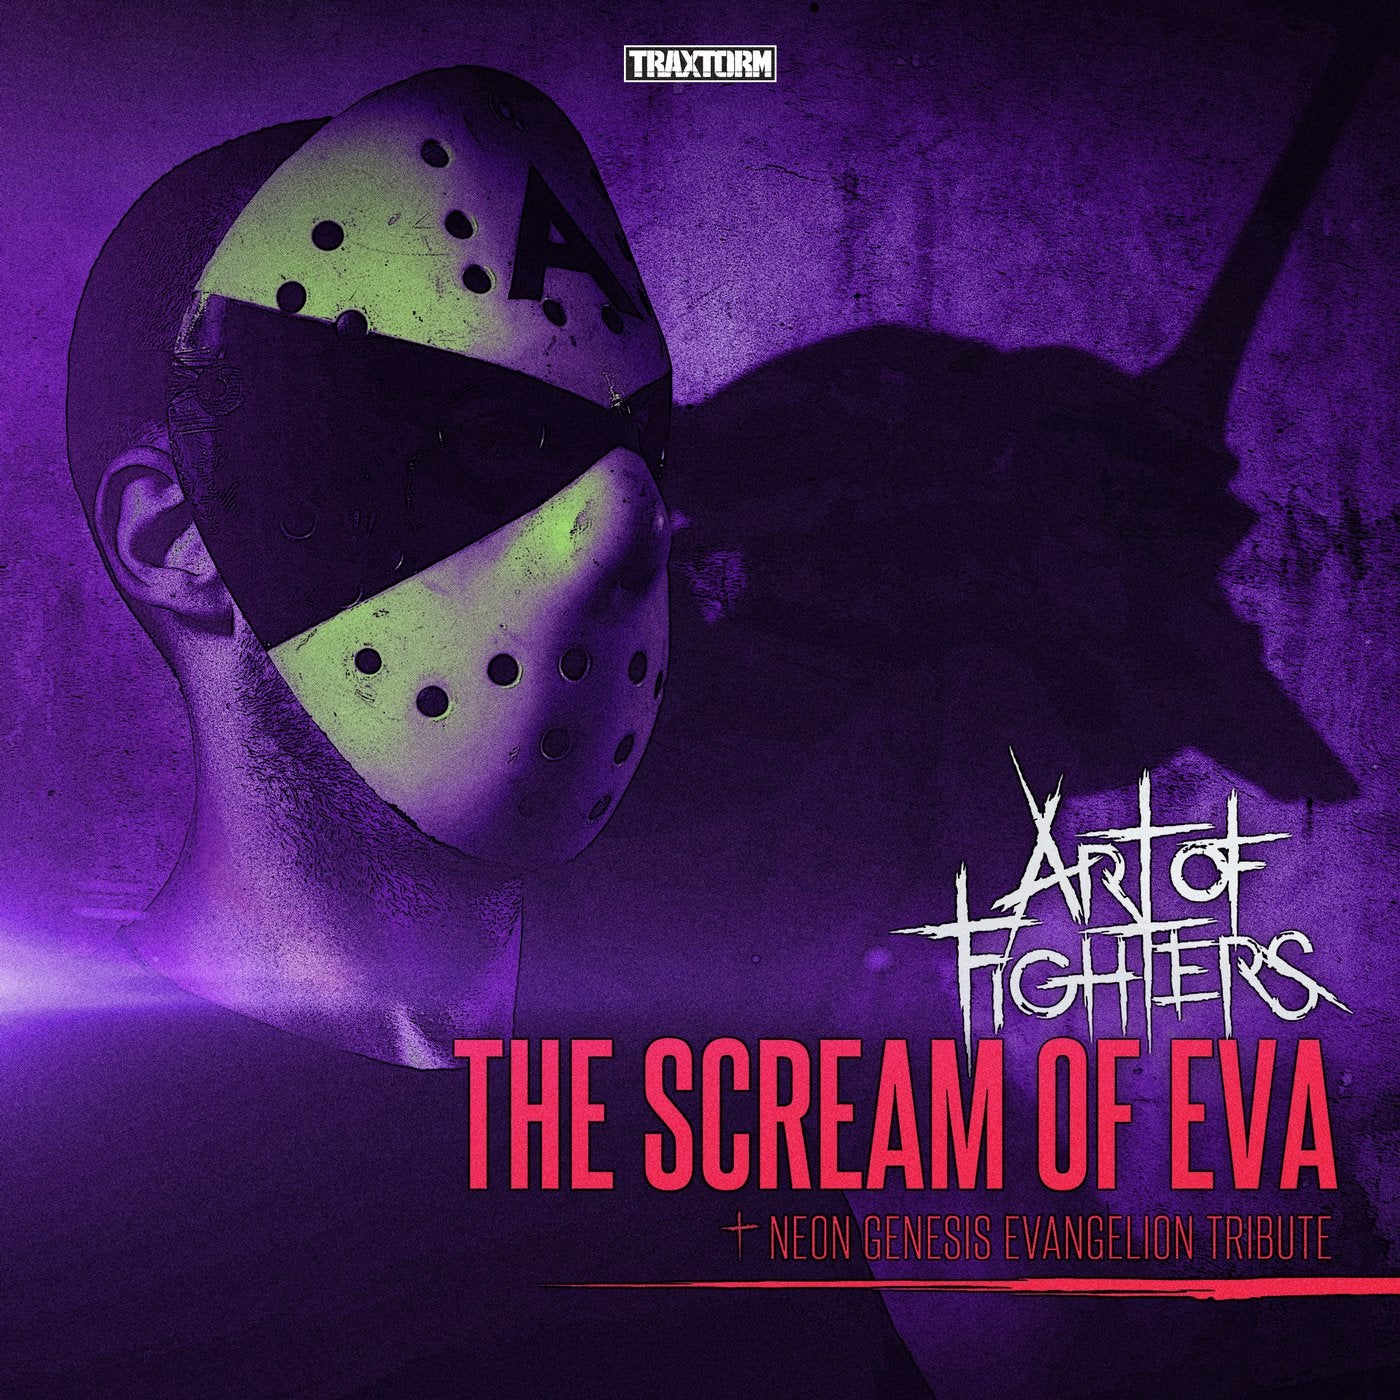 The scream of Eva (Neon Genesis Evangelion tribute)